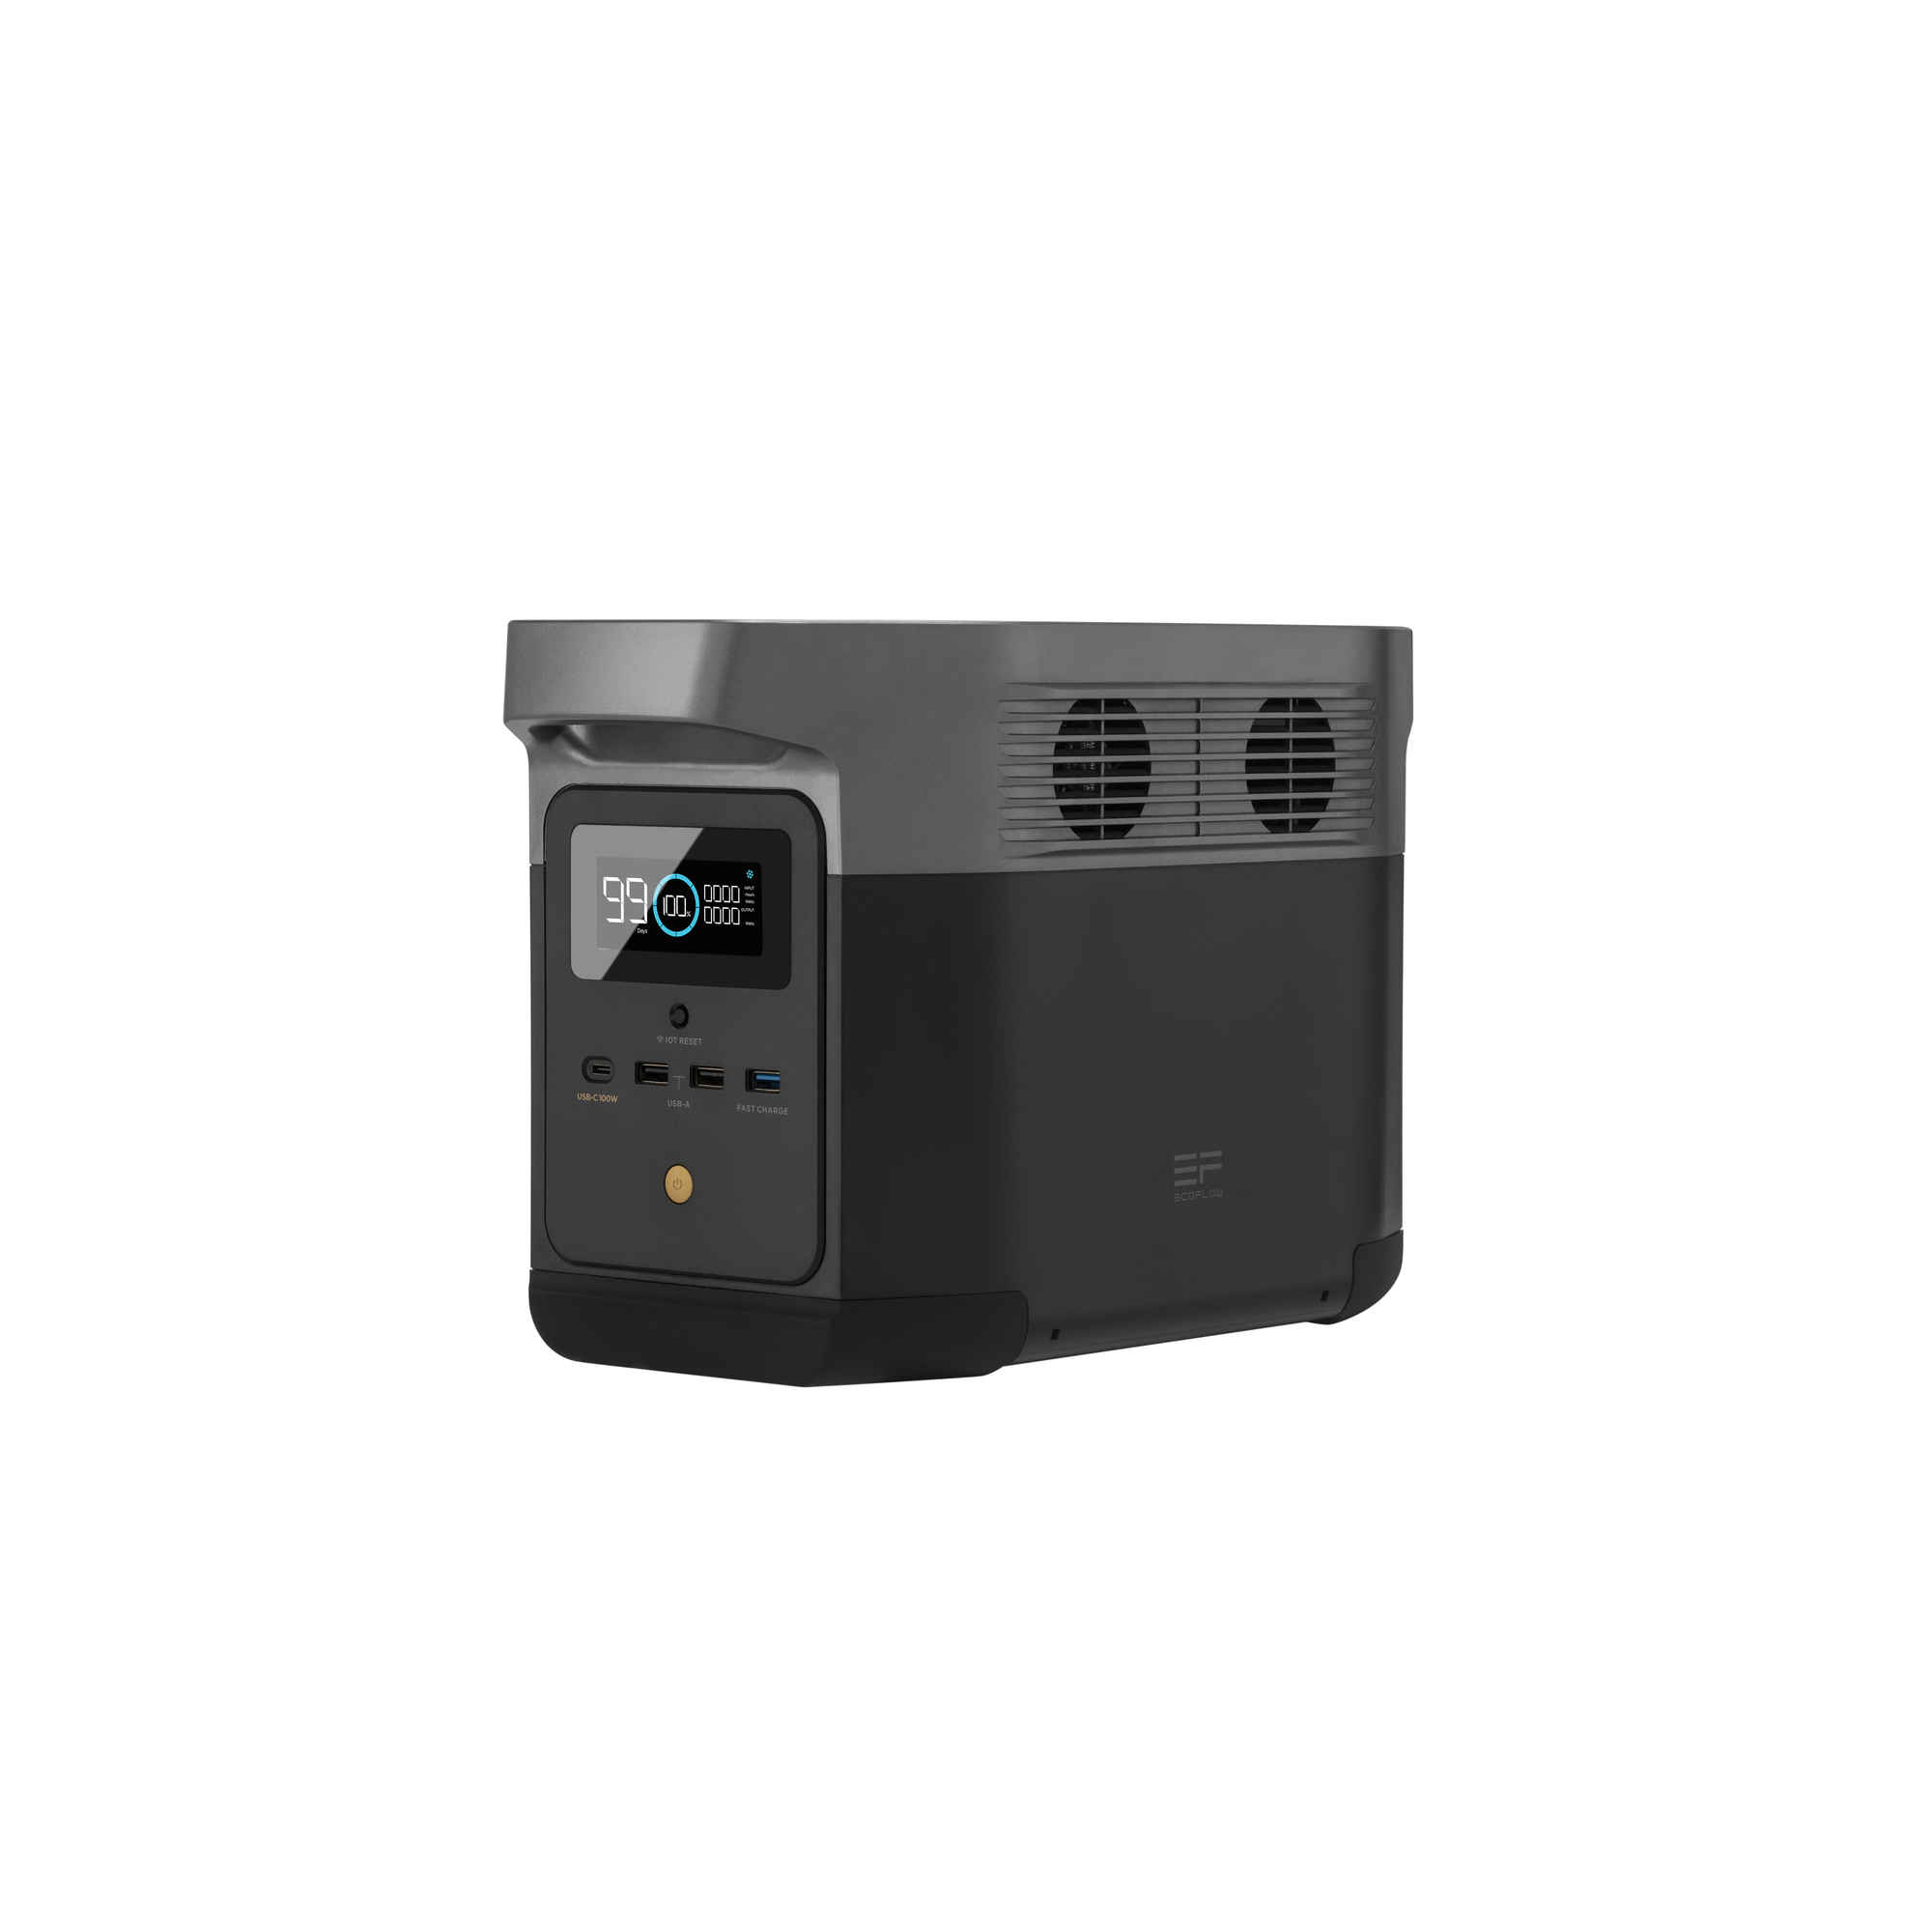 EcoFlow Delta 2 MAX - NEW MODEL – Clean Portable Power